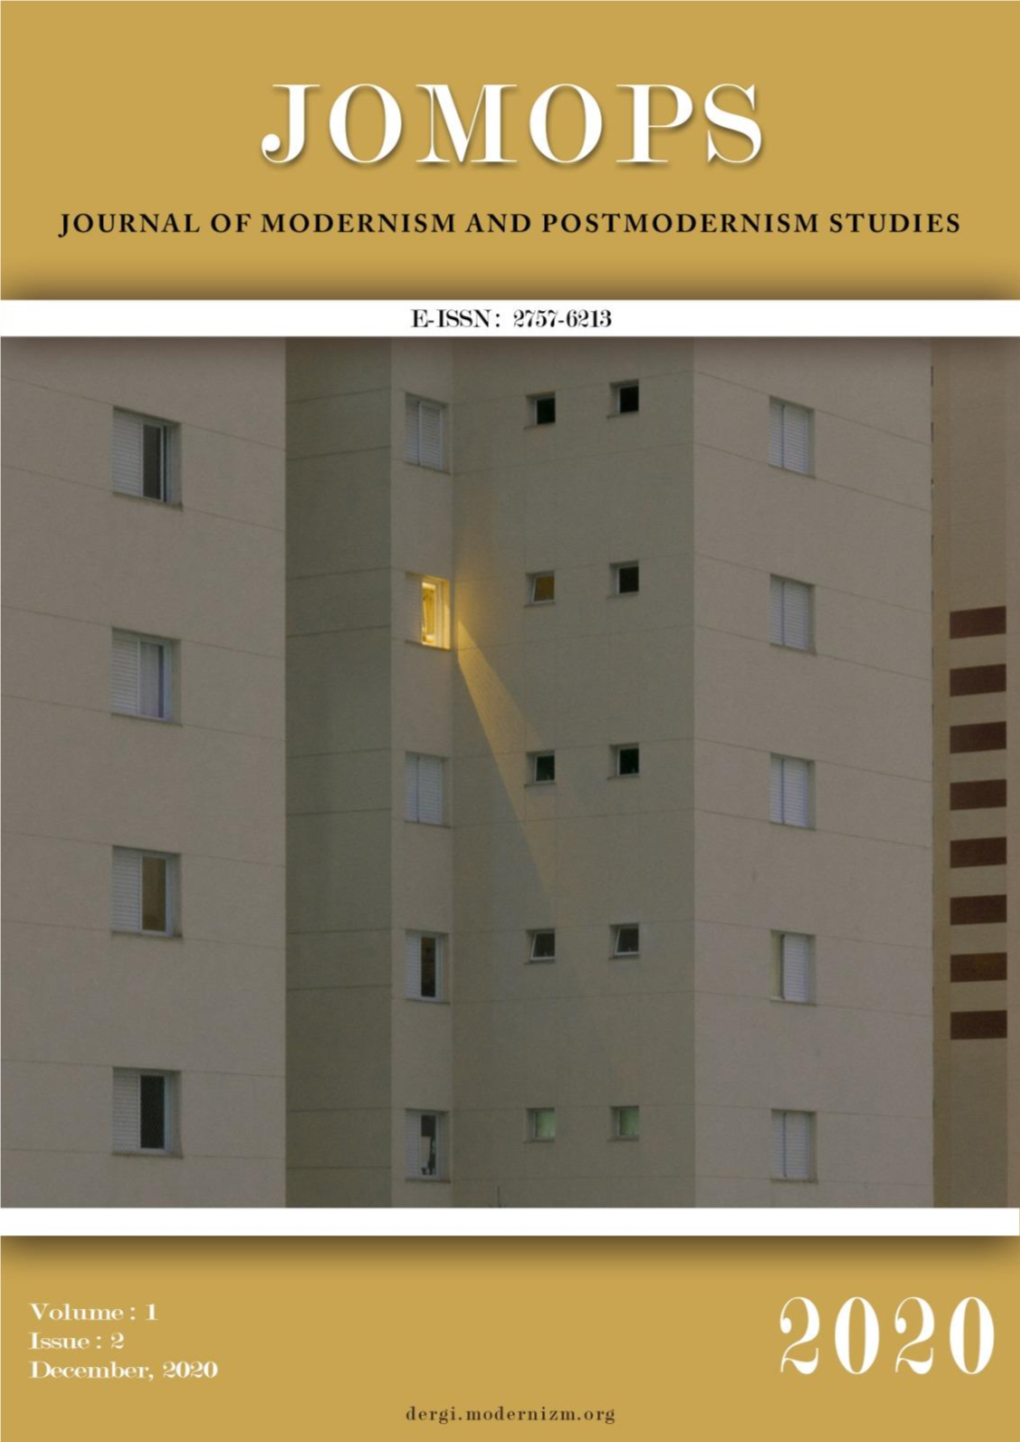 JOMOPS Journal of Modernism and Postmodernism Studies (The Official Journal of Modernism and Postmodernism Studies Network)